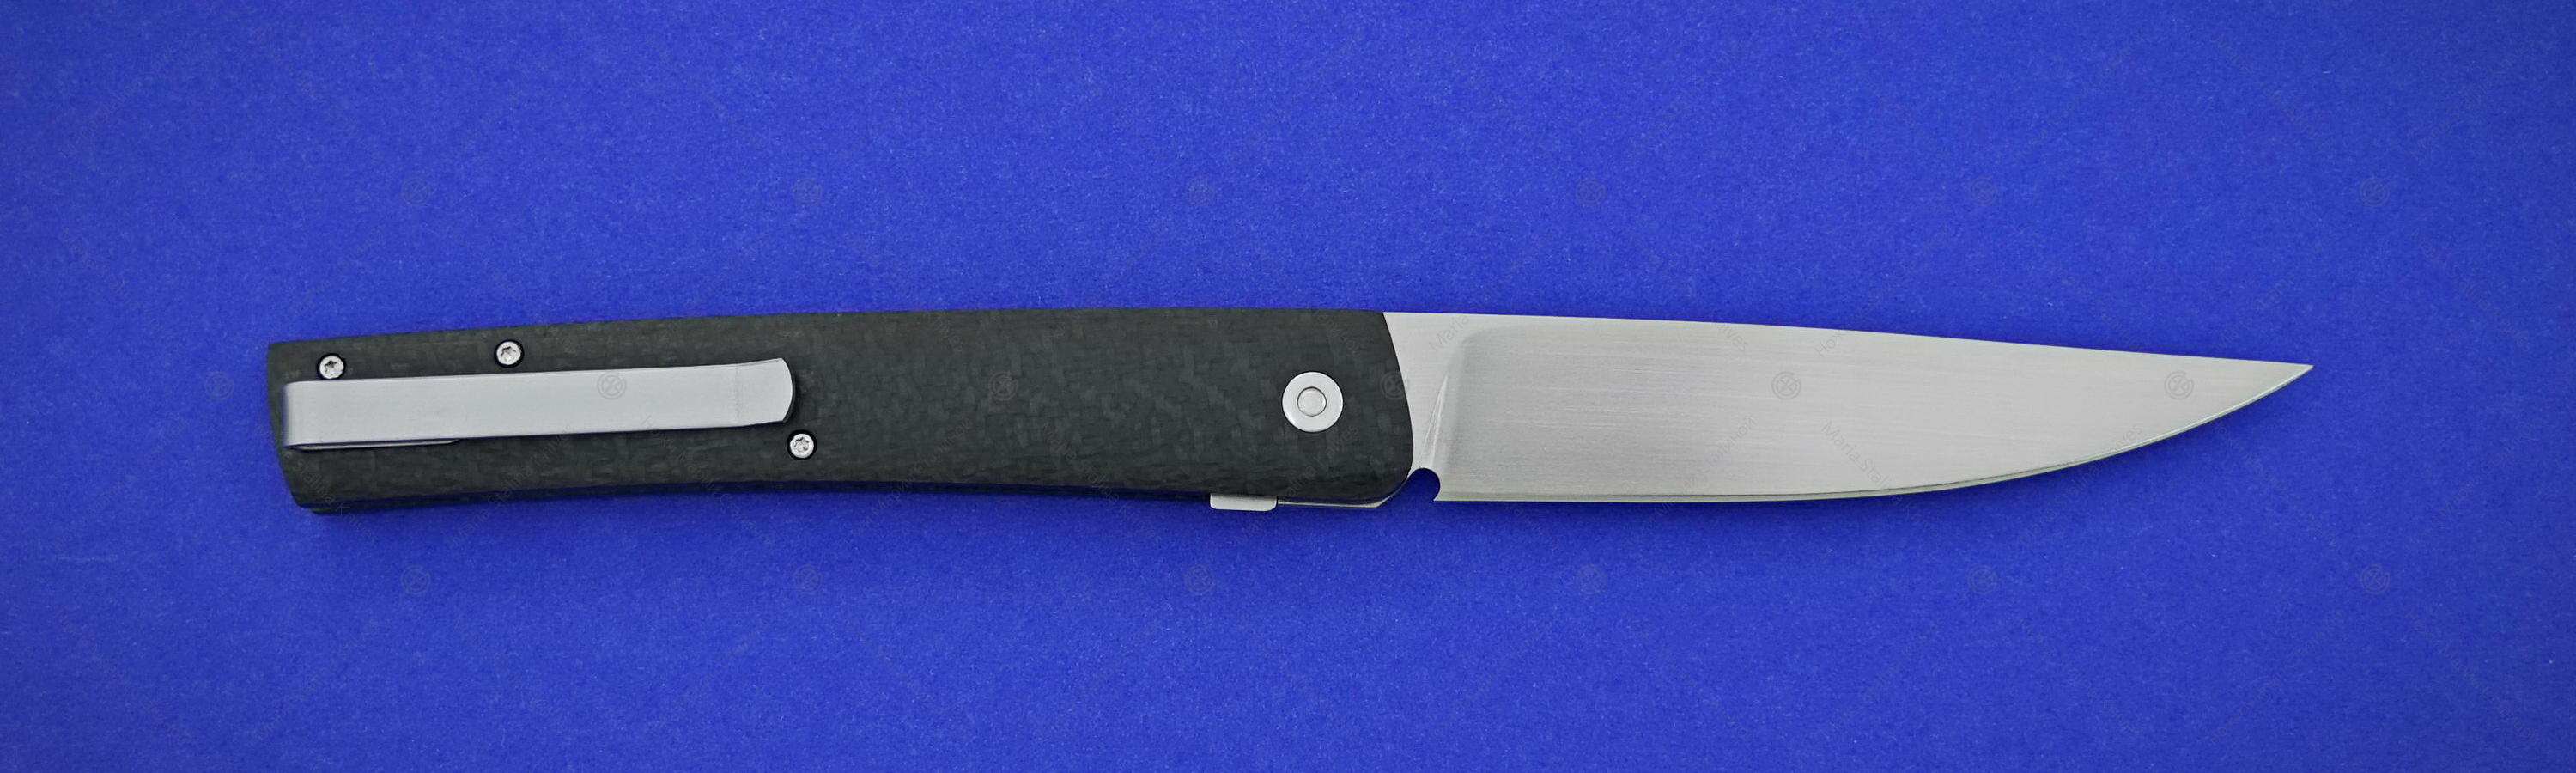 RWL-34 blade